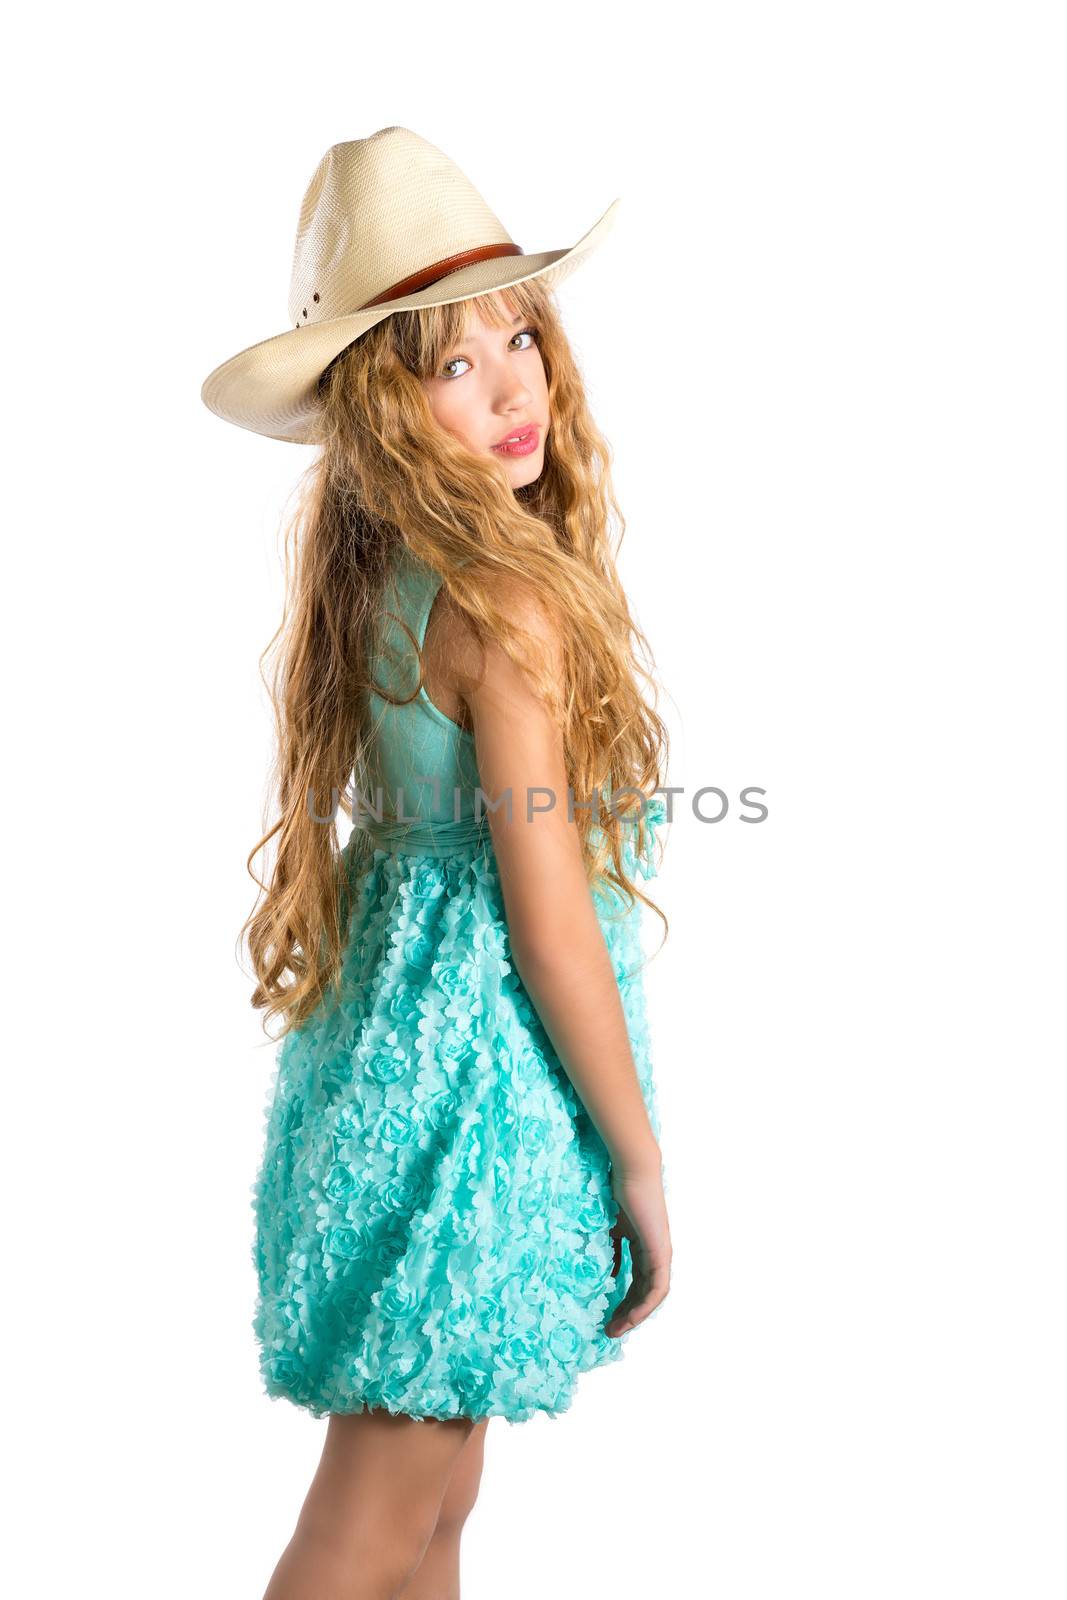 Blond fashion cowboy hat girl with turquoise dress by lunamarina